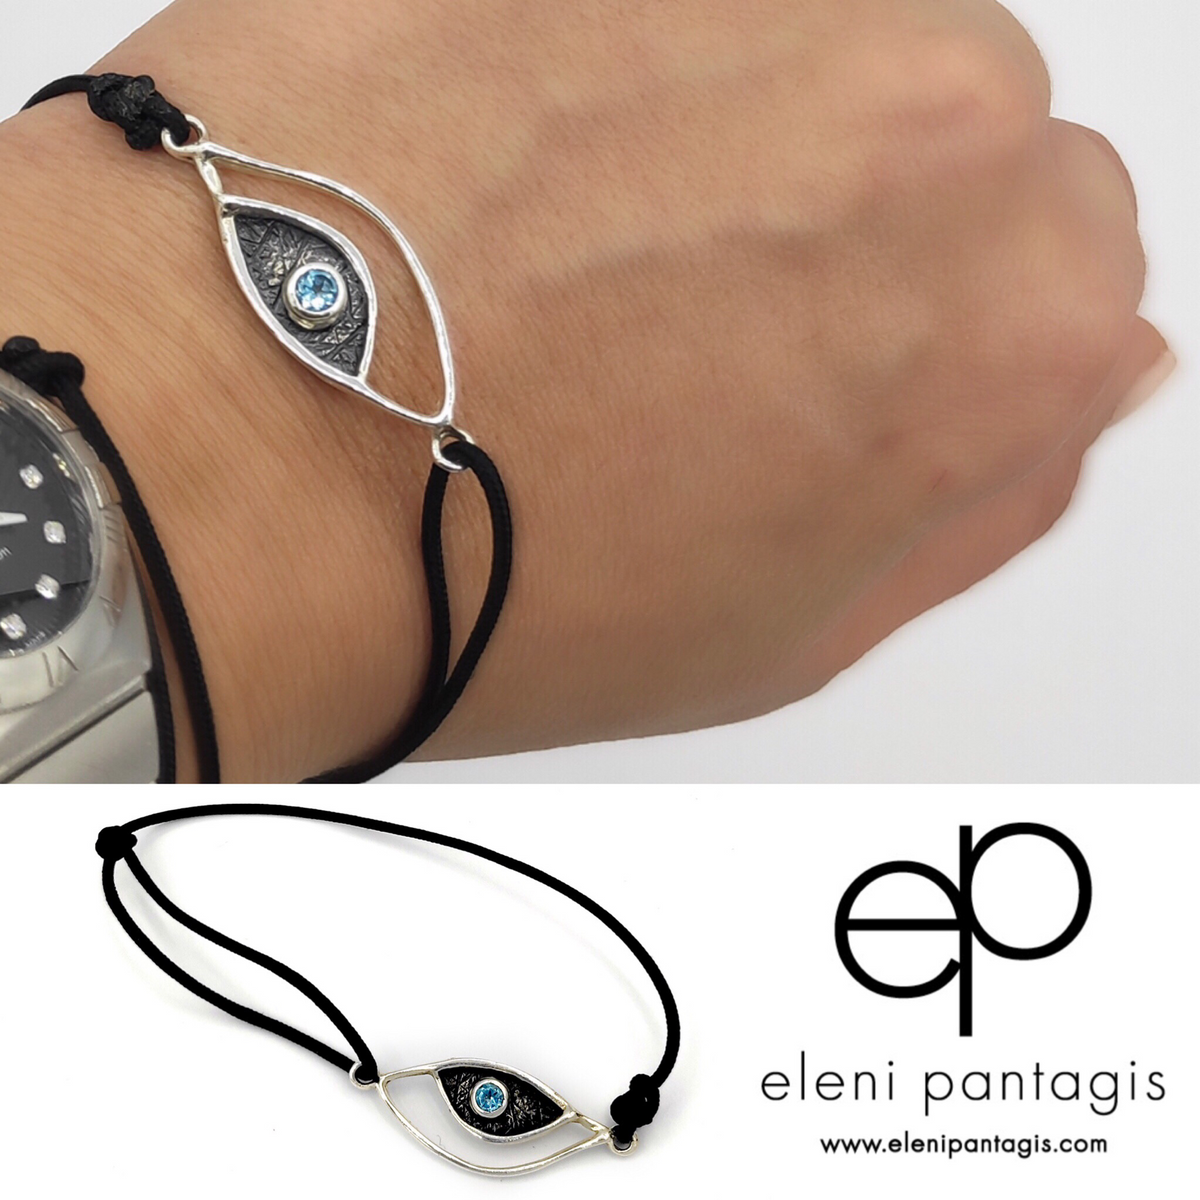 Evil eye bracelet, evil eye jewelry with blue topaz stone, evil eye bracelet 